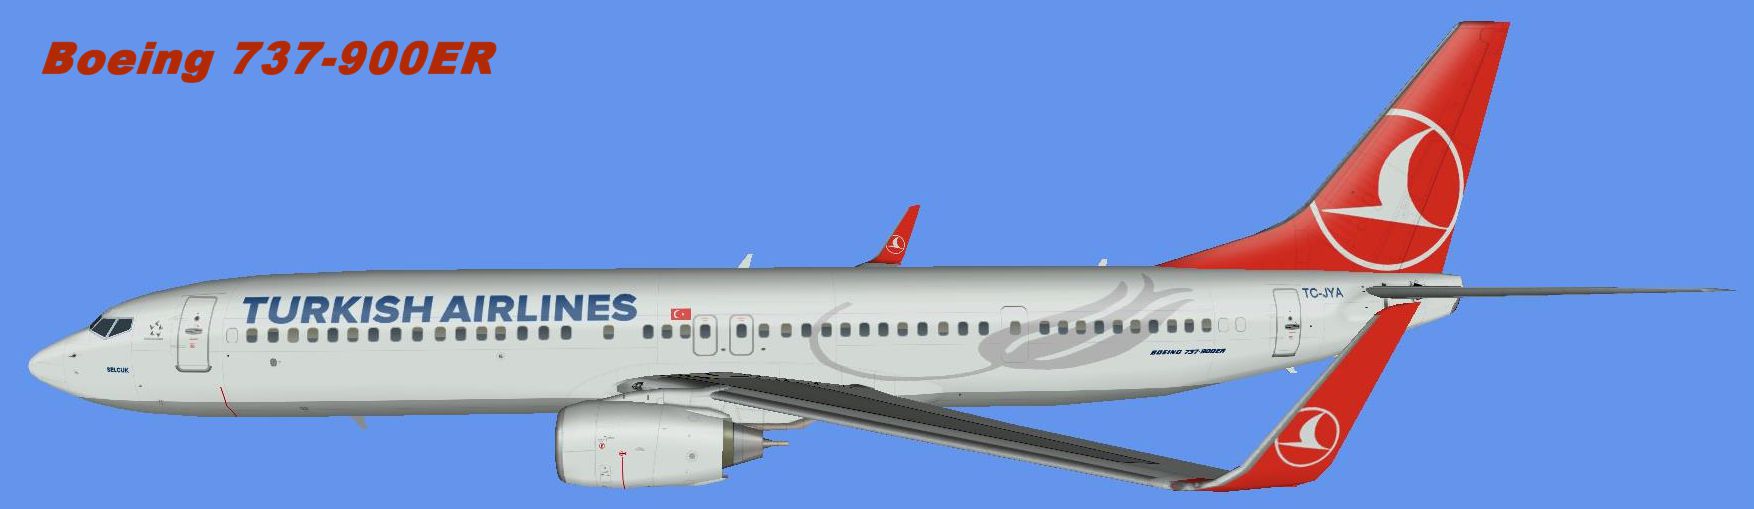 Boeing 737 900er Fsx Planes